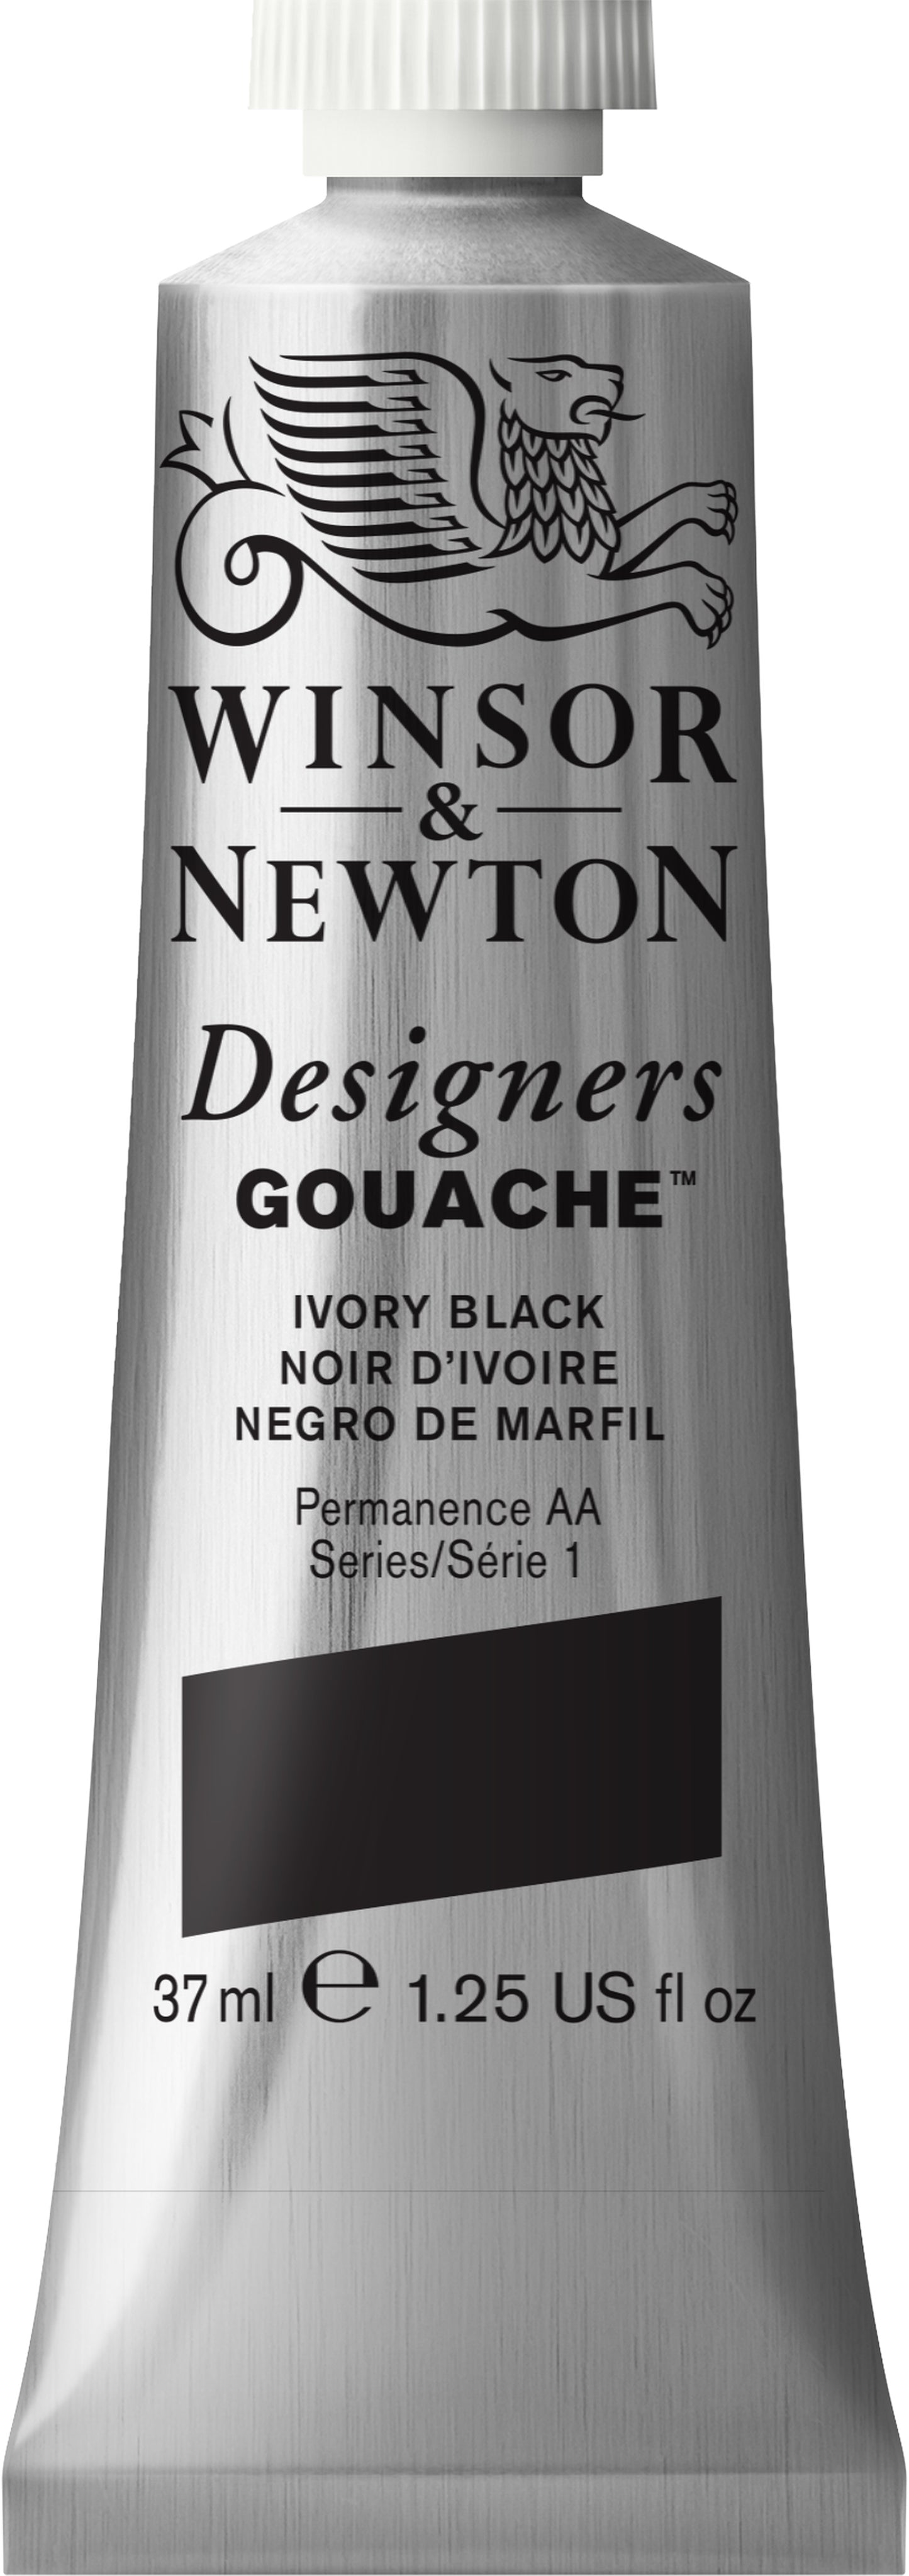 Winsor & Newton Designers Gouache 37ml Ivory Black